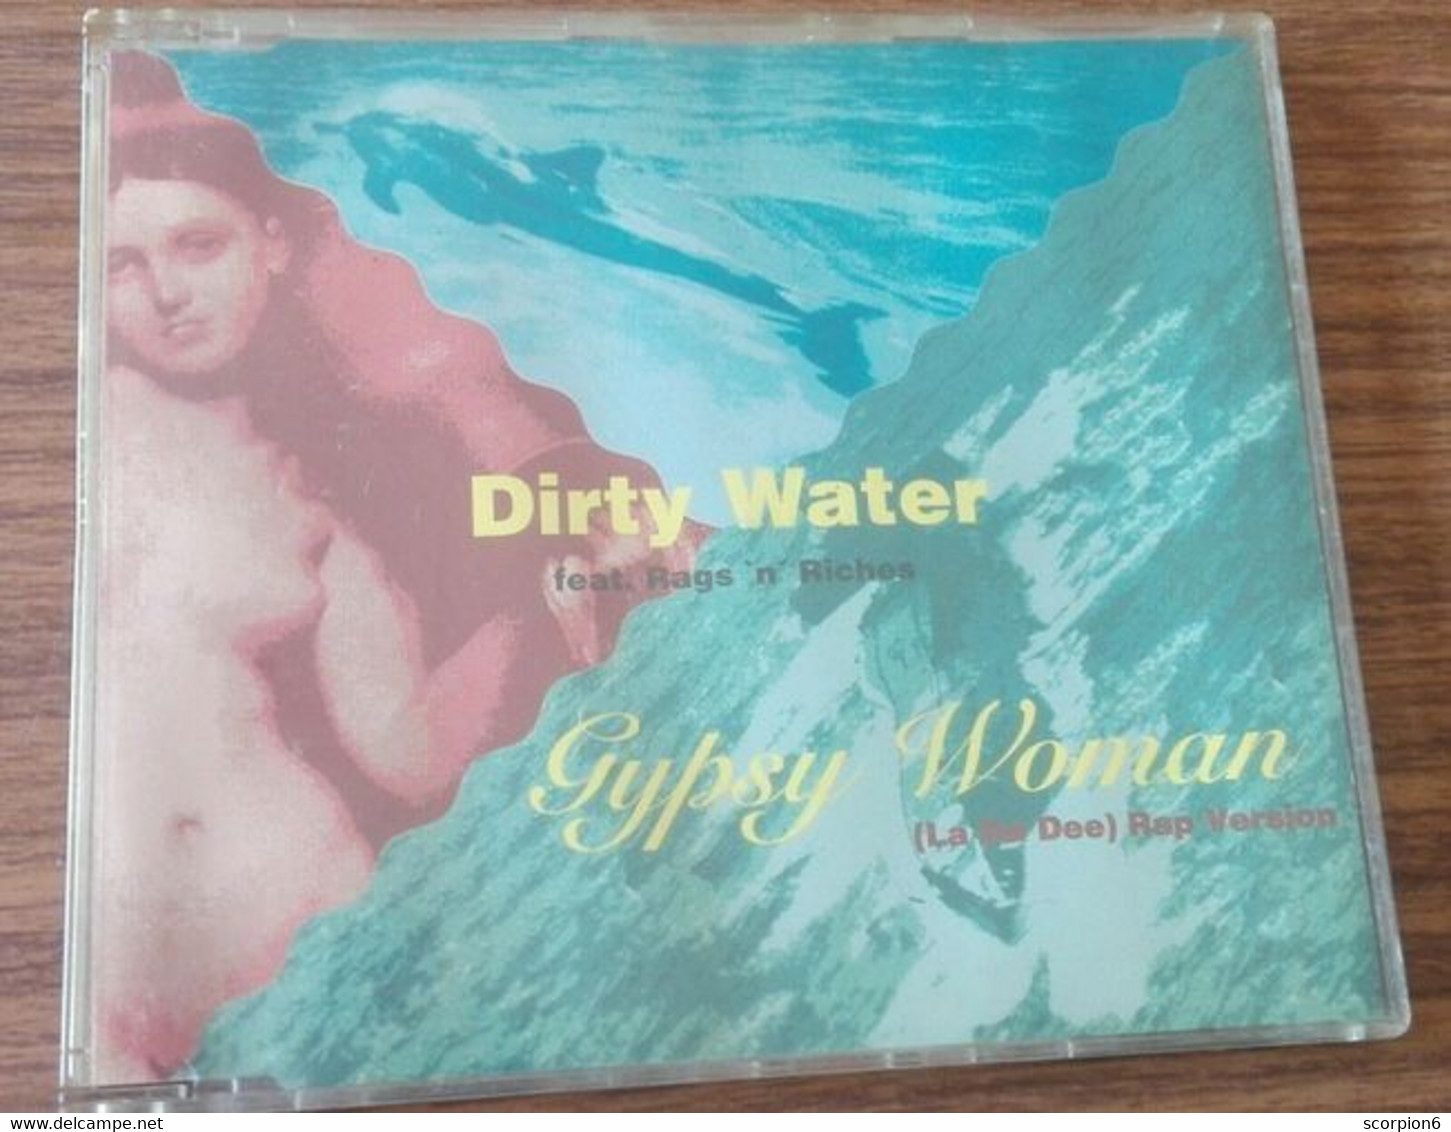 Maxi CD - Dirty Water Feat. Rags 'N' Riches ?– Gypsy Woman (La Da Dee) Rap Version - Rap En Hip Hop